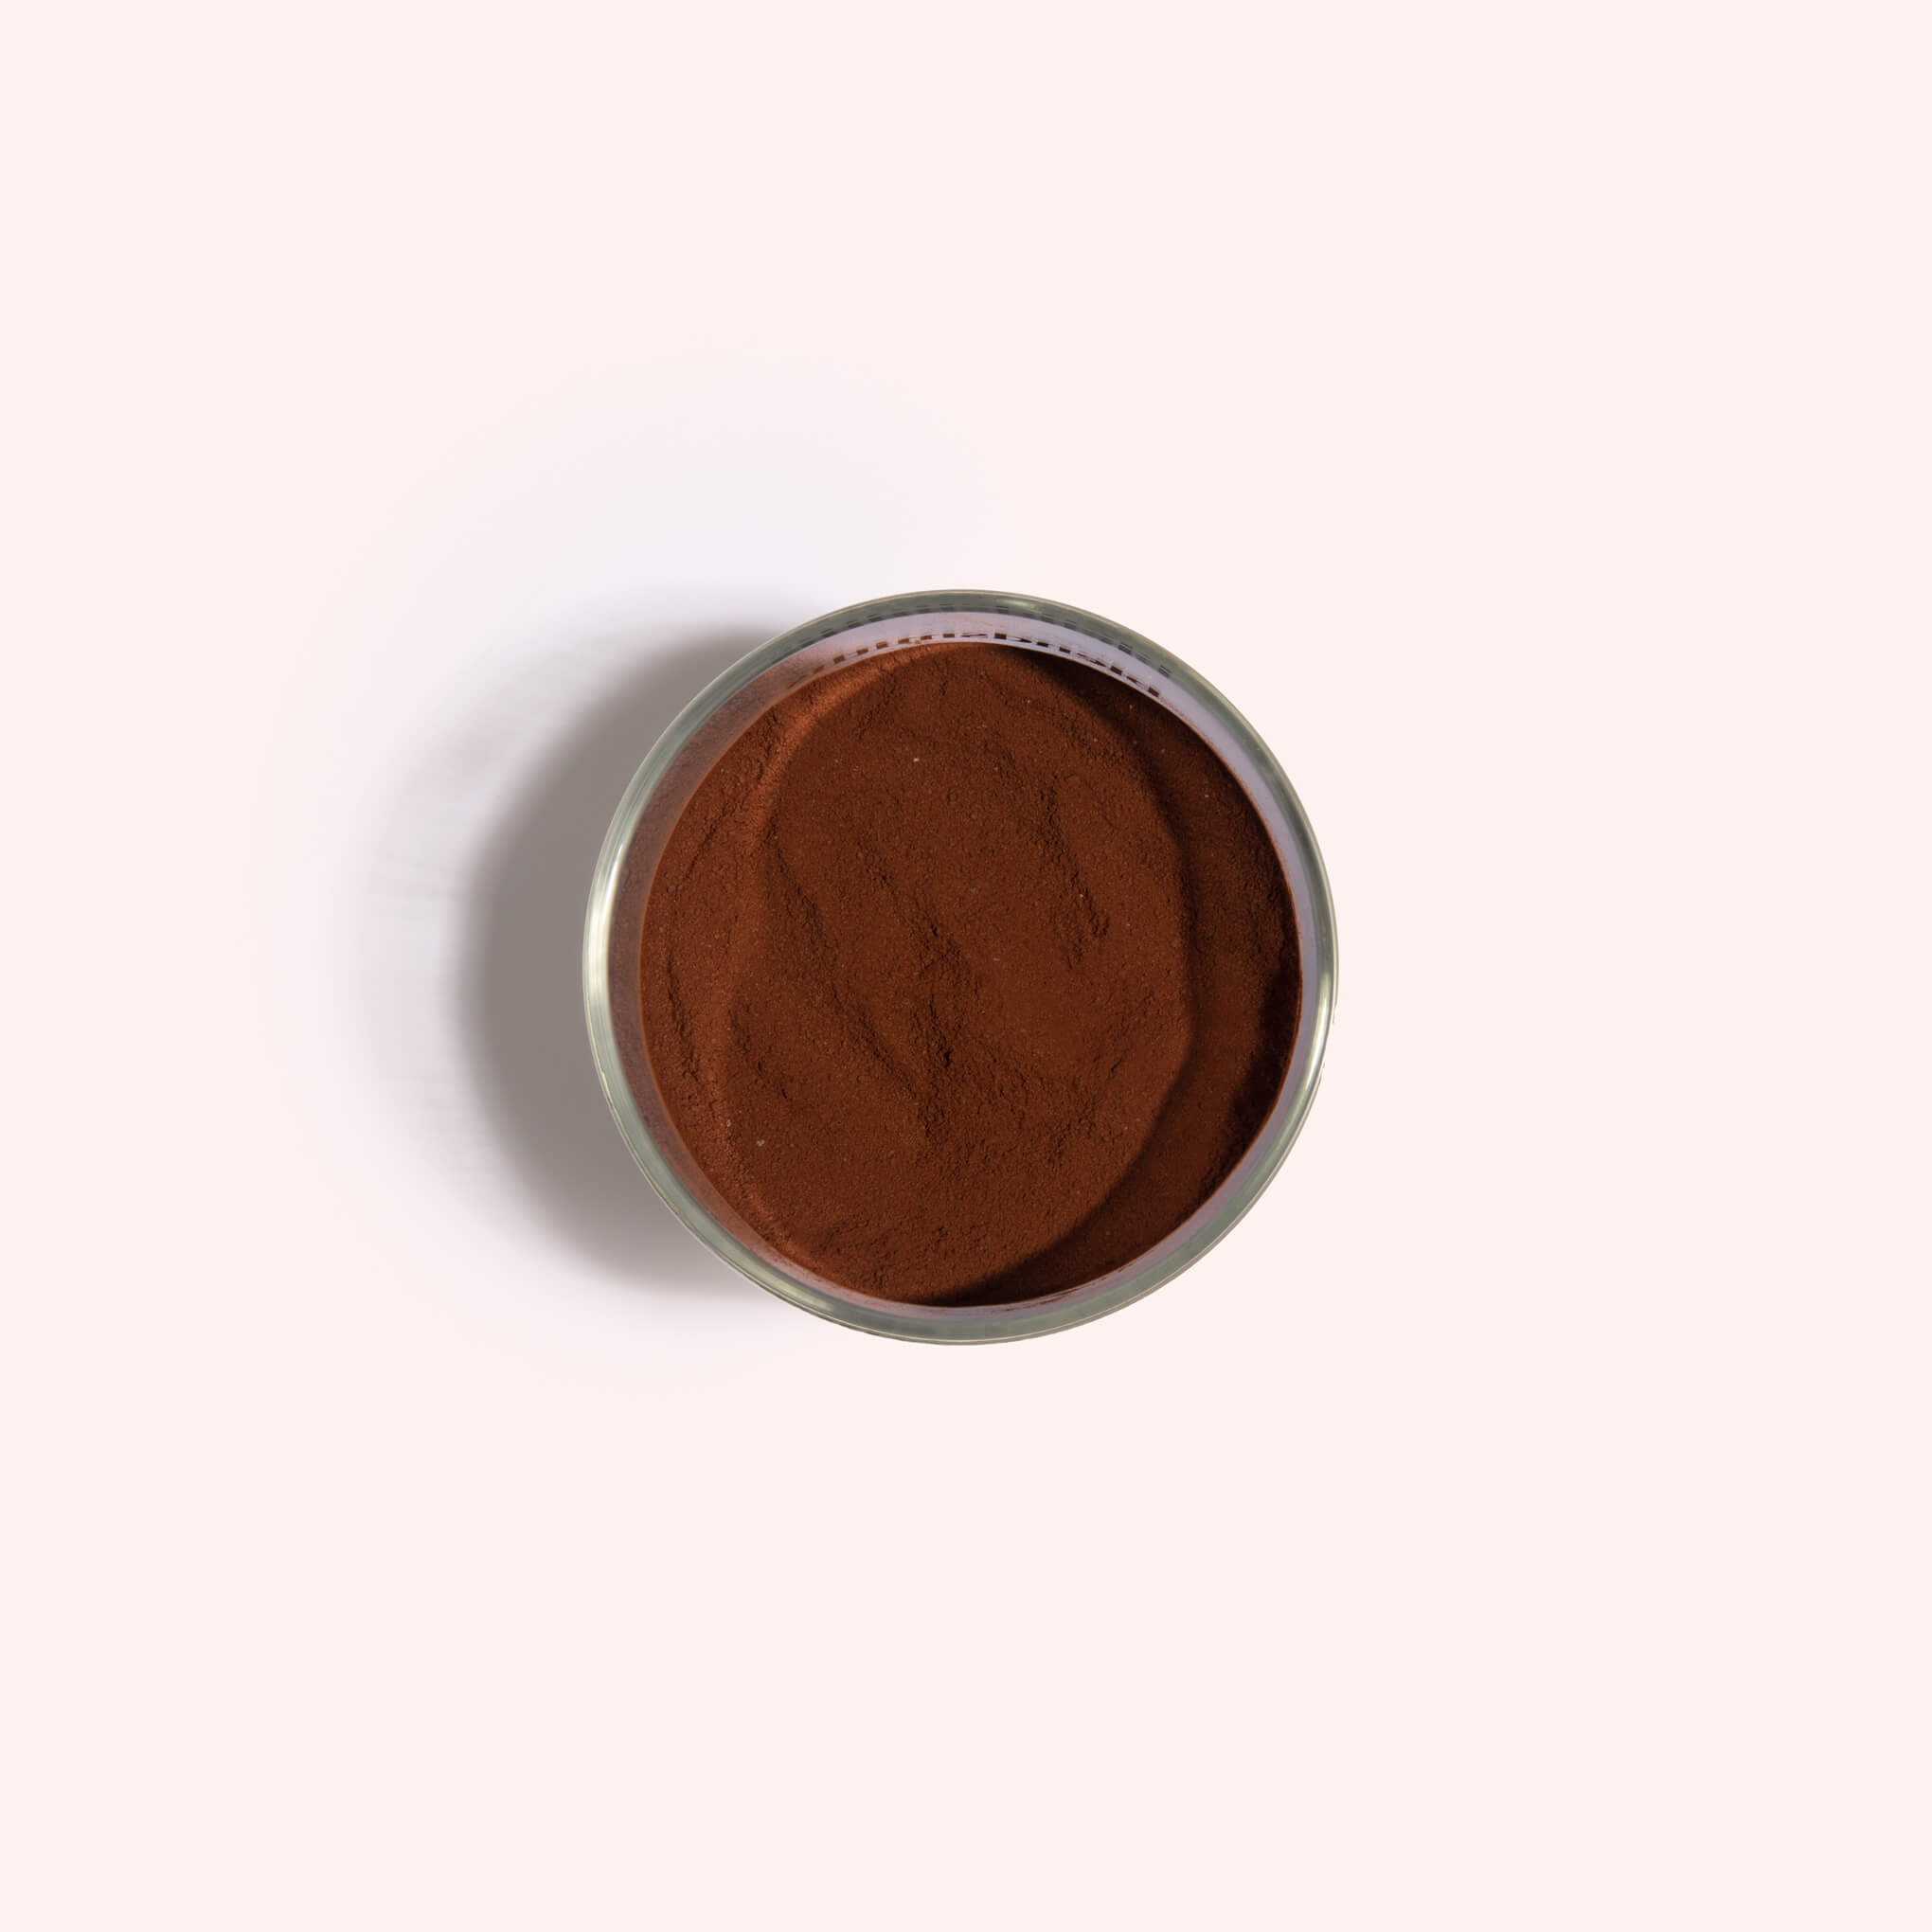 Storage Jar - Original Chocolate Blend